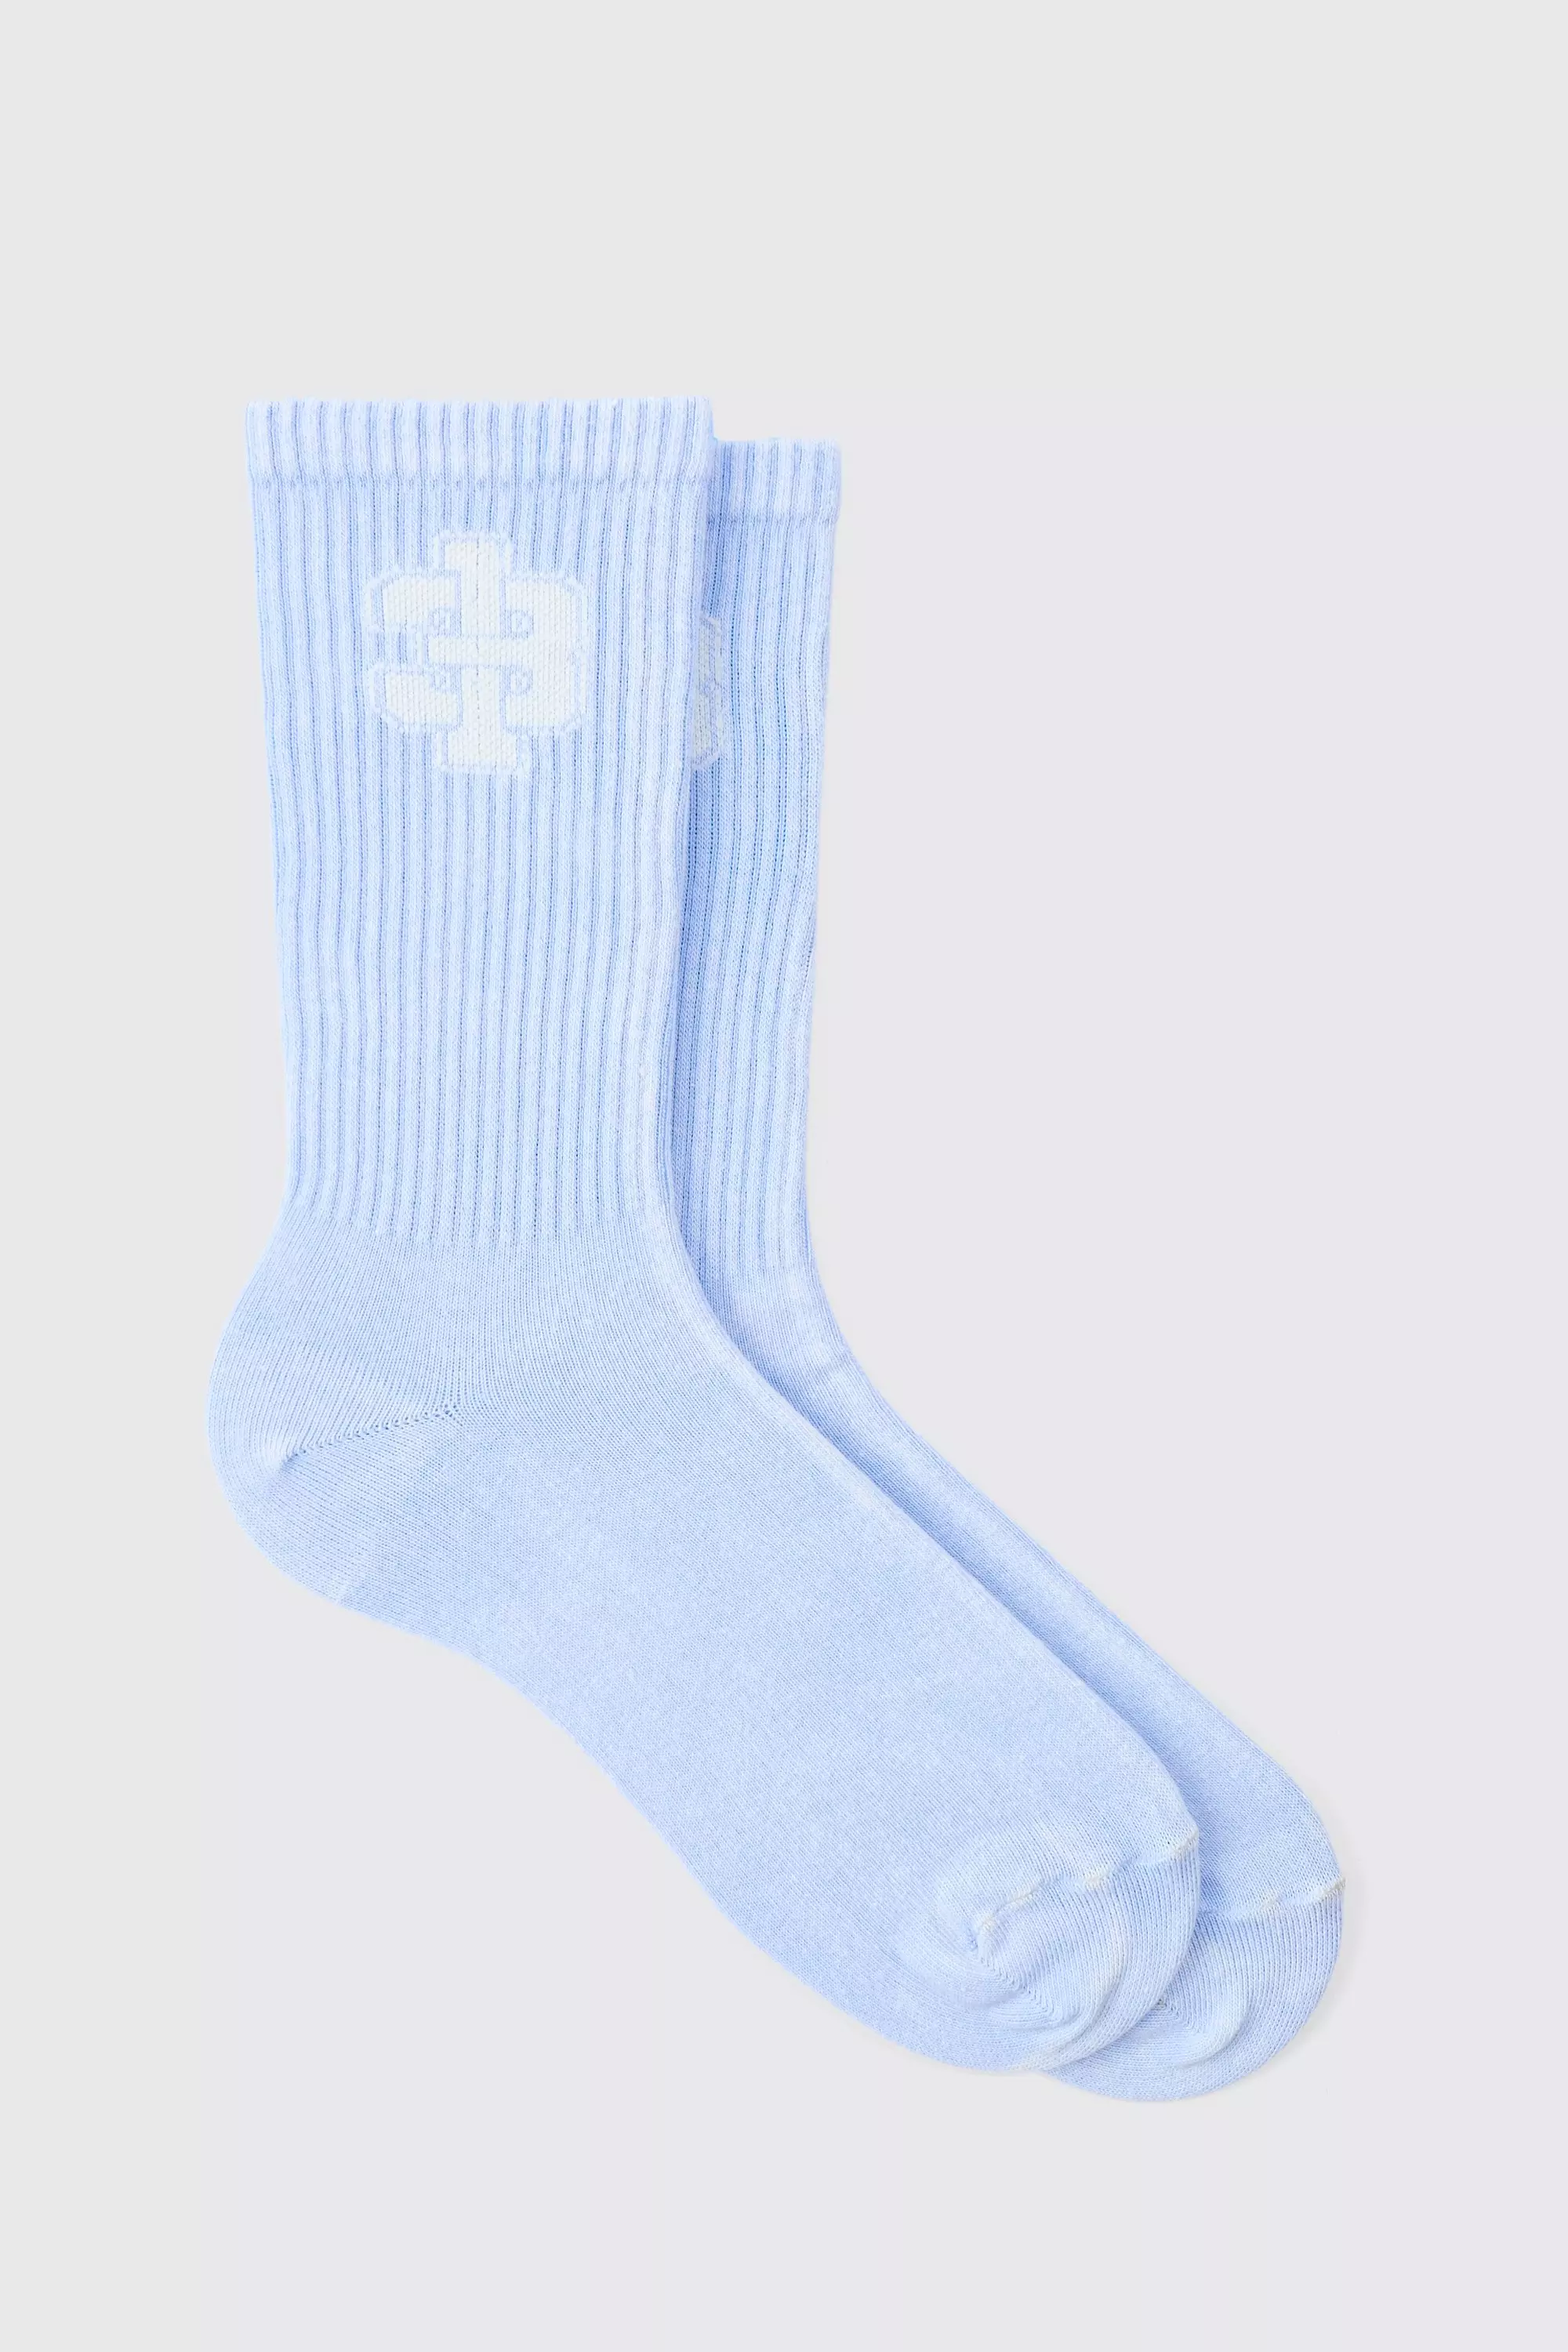 Acid Wash 13 Jacquard Socks In Blue Light blue